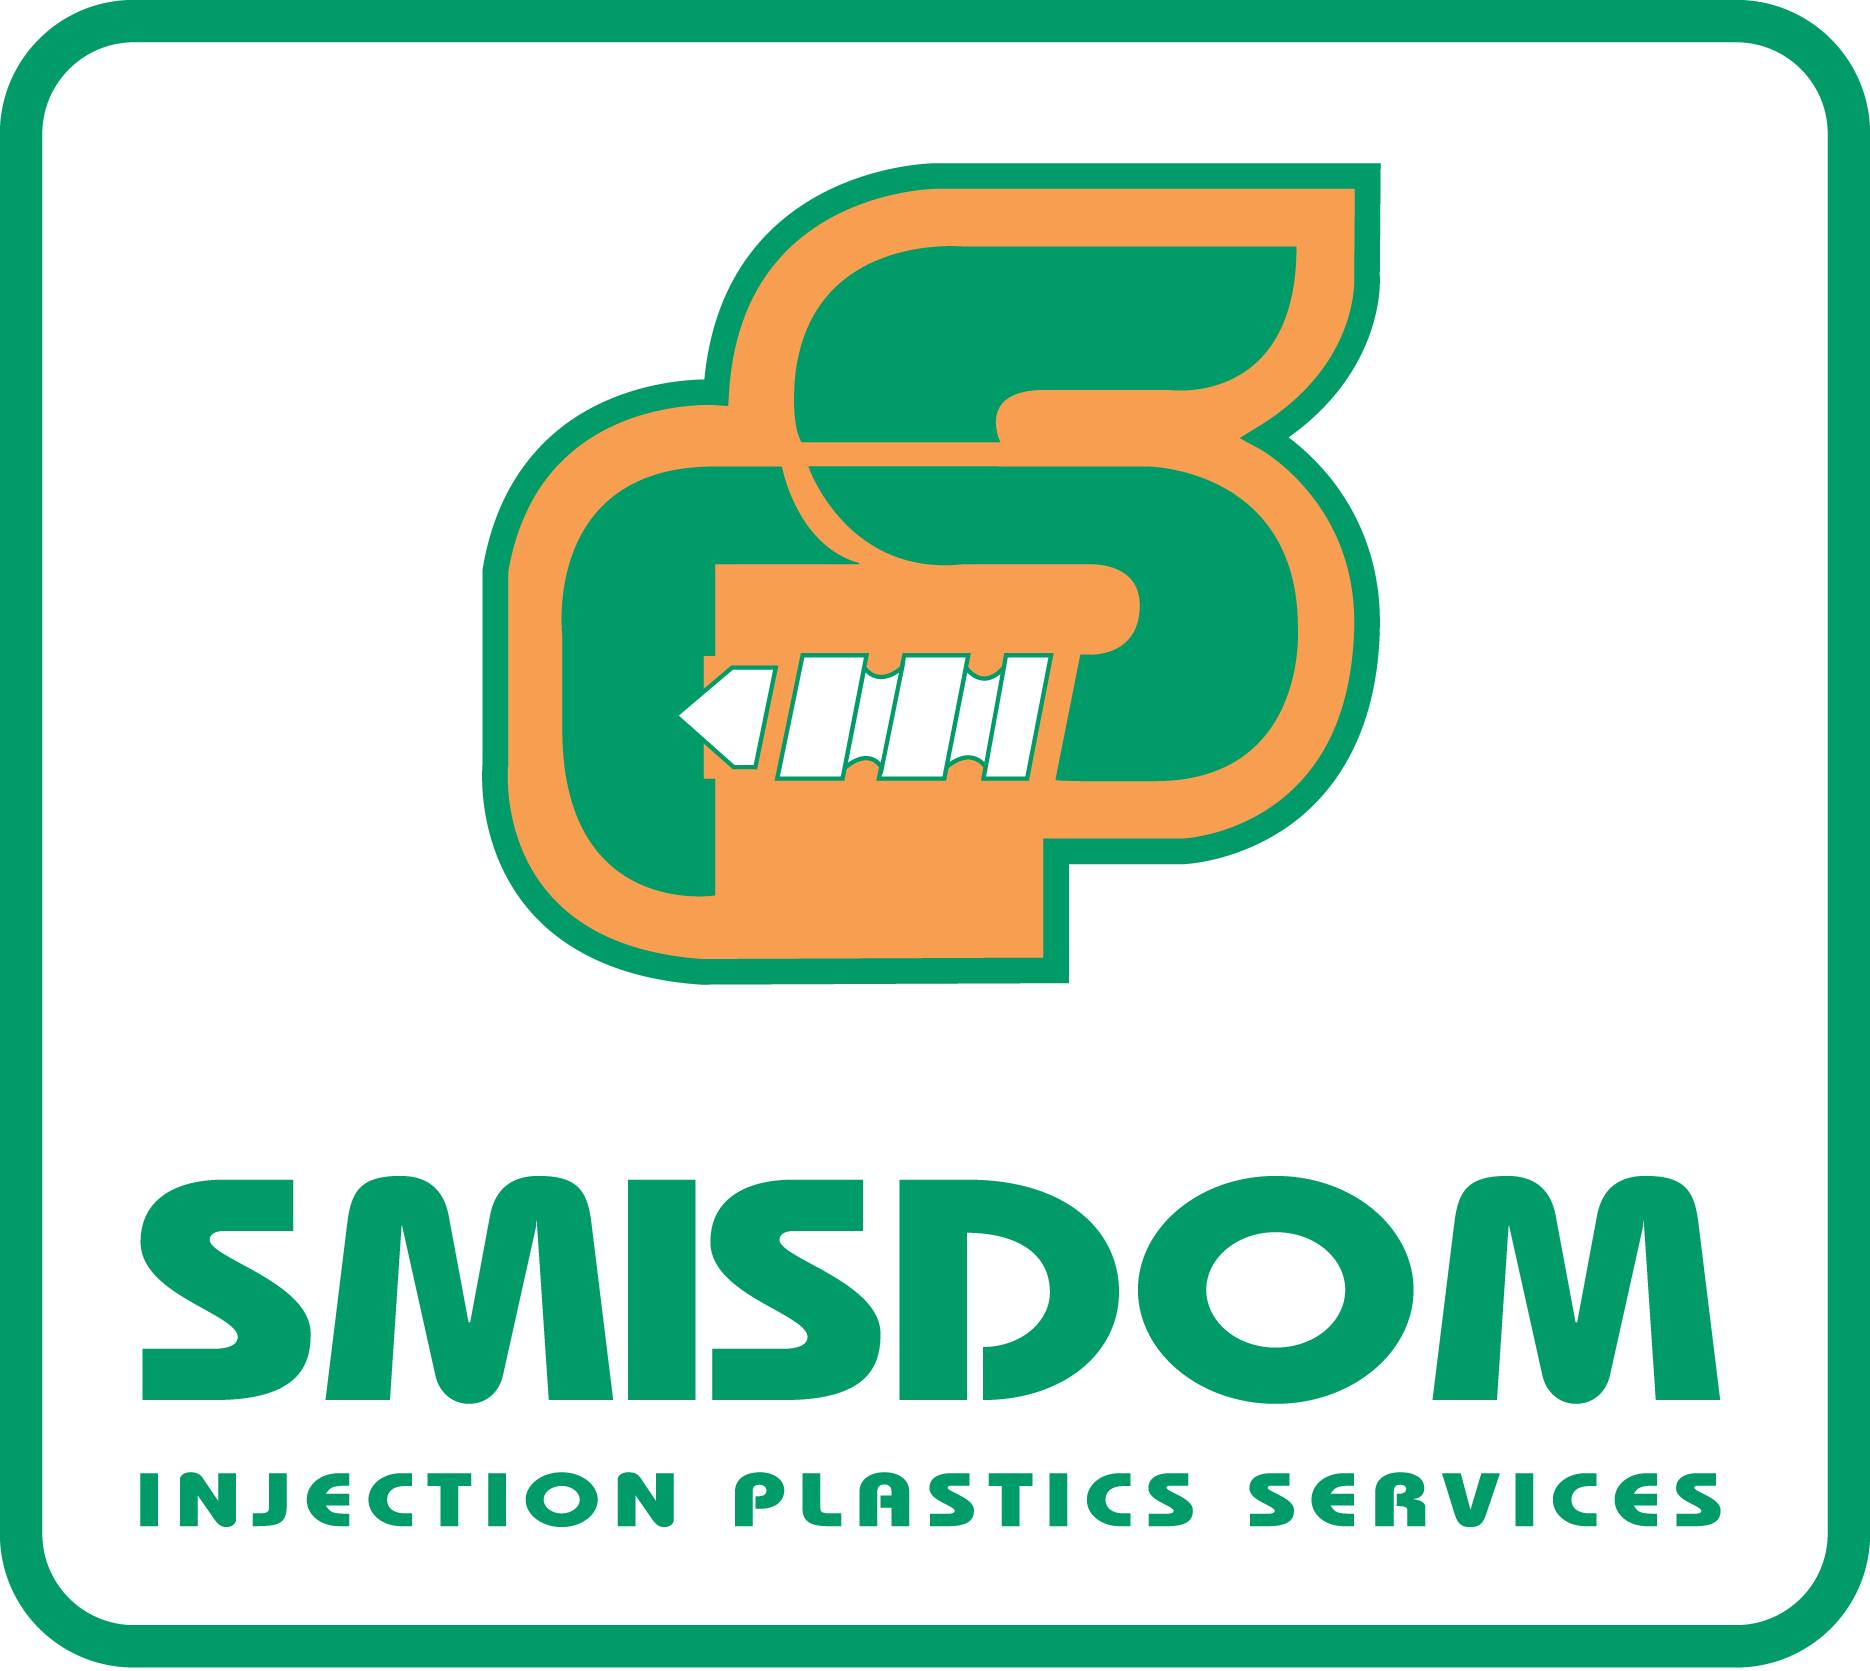 Smisdom Plastics